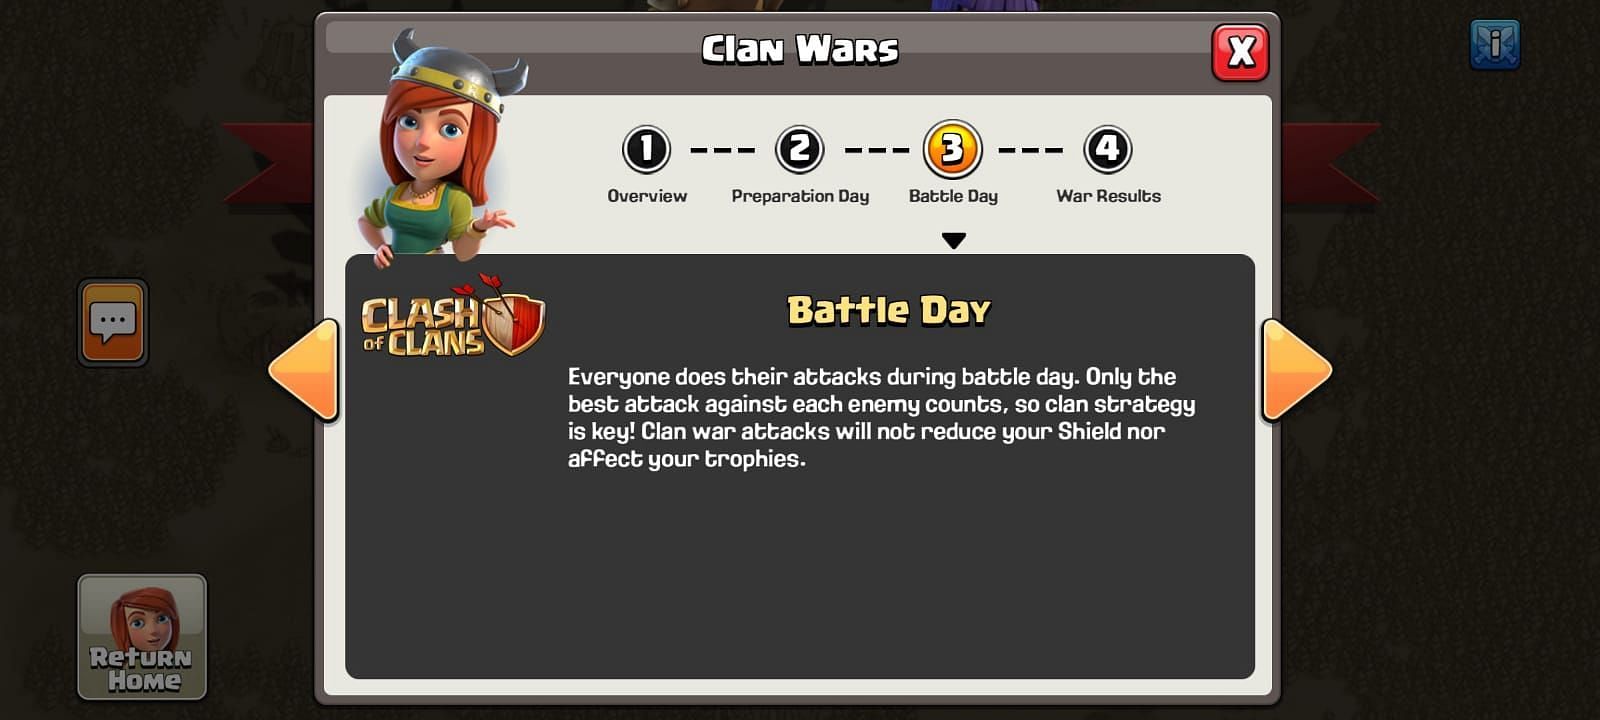  Battle Day (Image via Clash of clans)